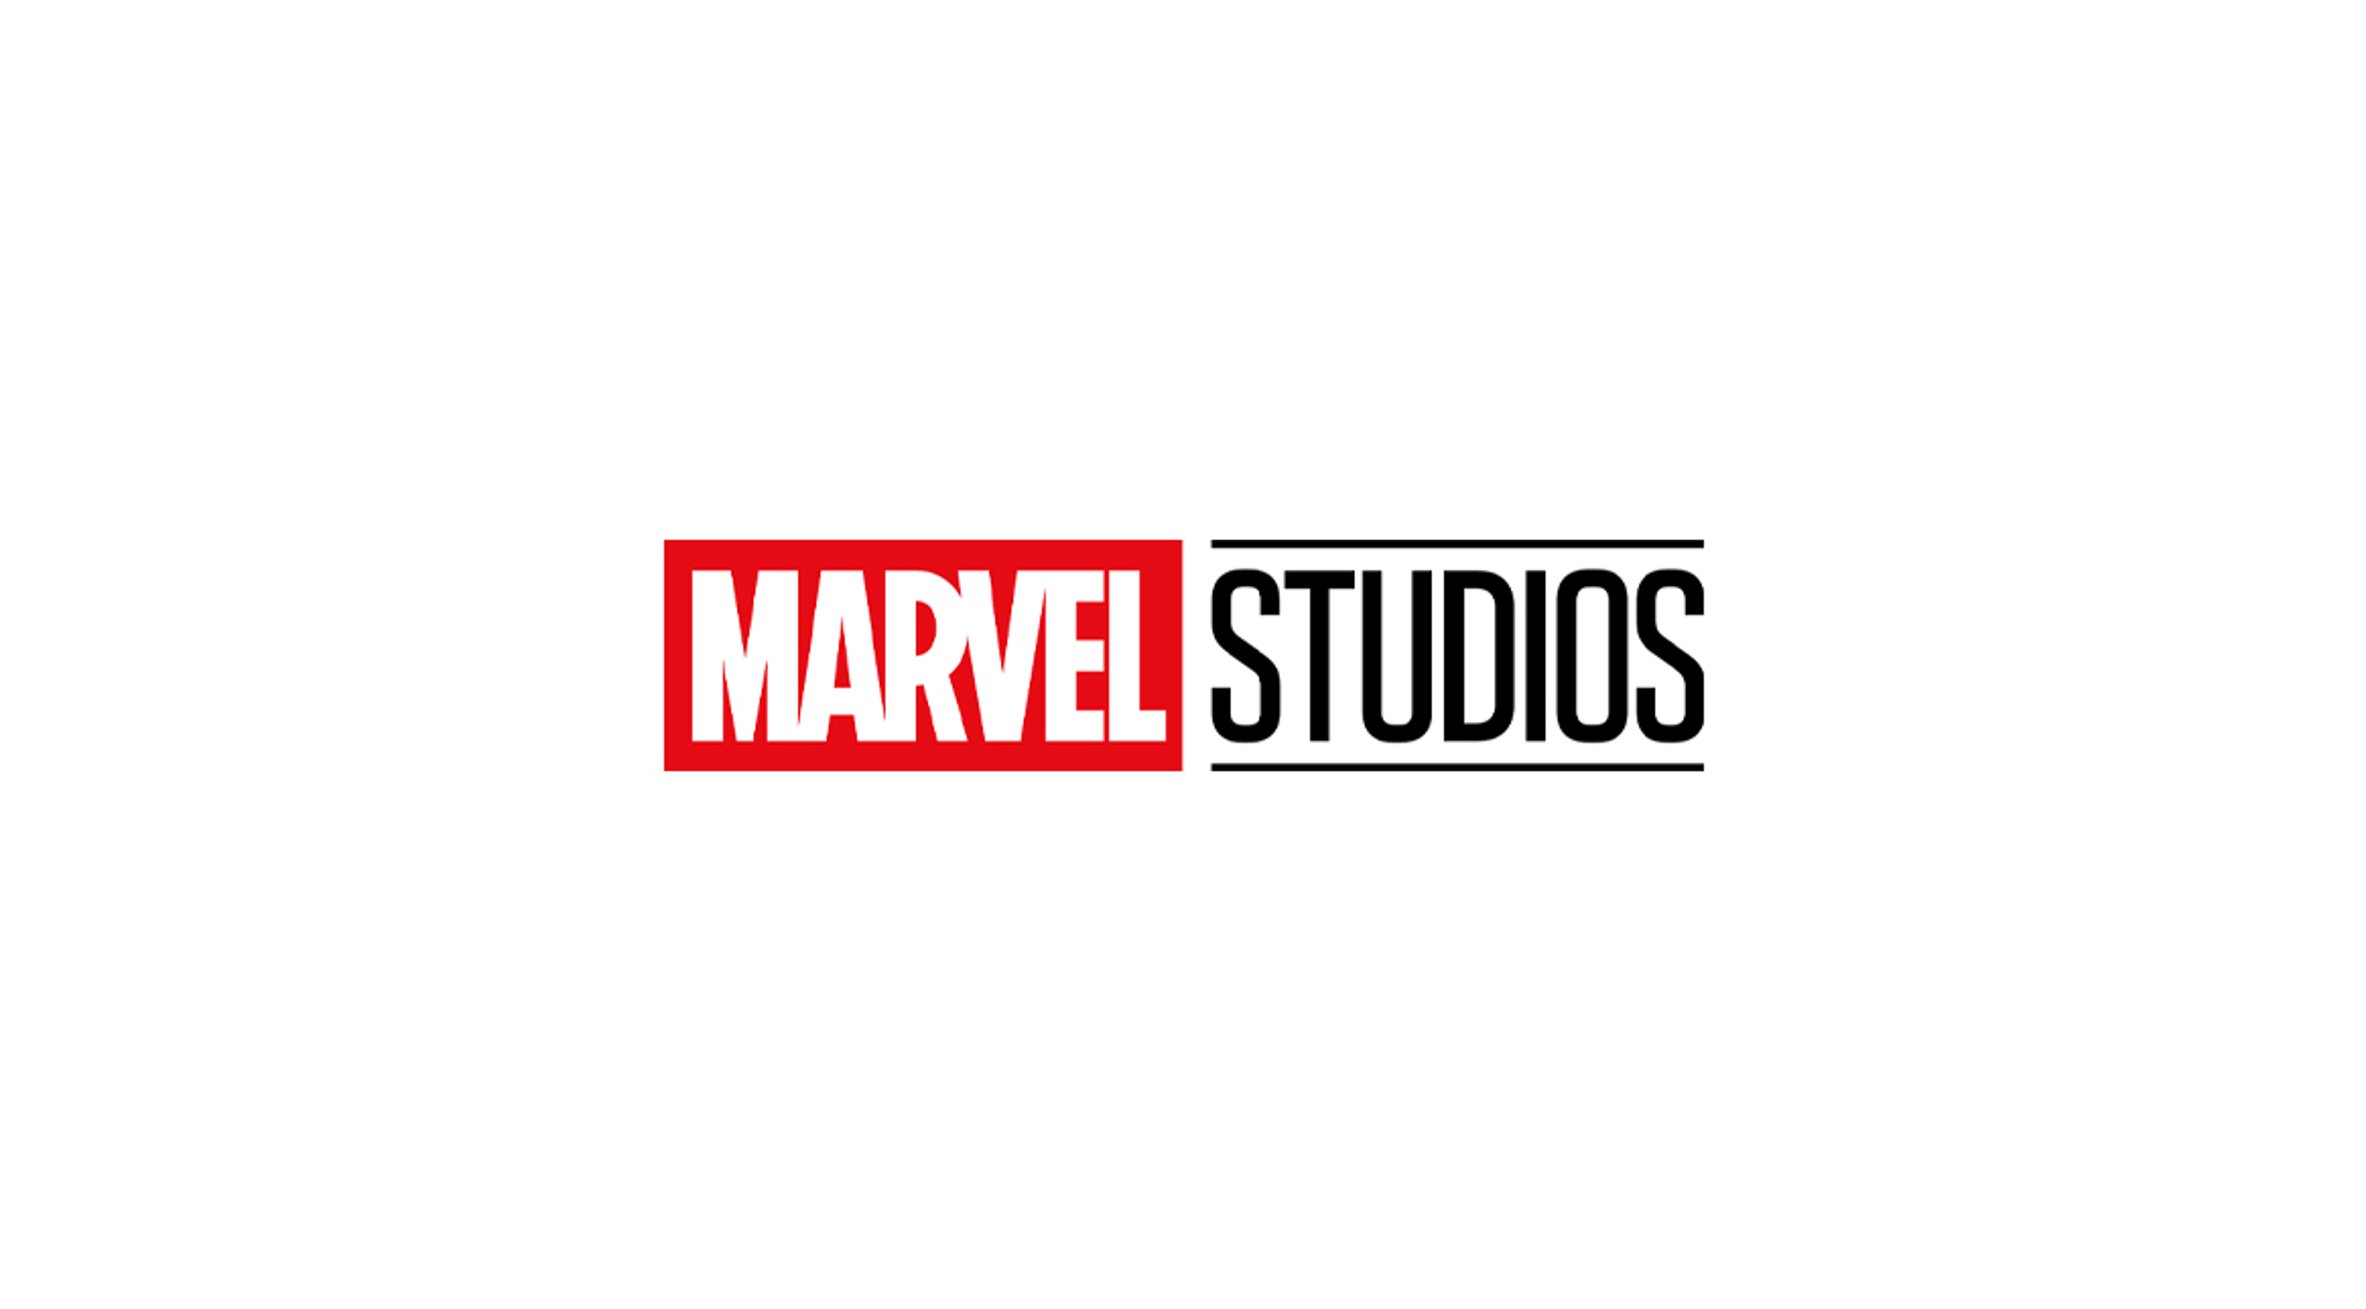 Marvel Studios is Casting Marvel Super Fans of Super Power Women, Nationwide